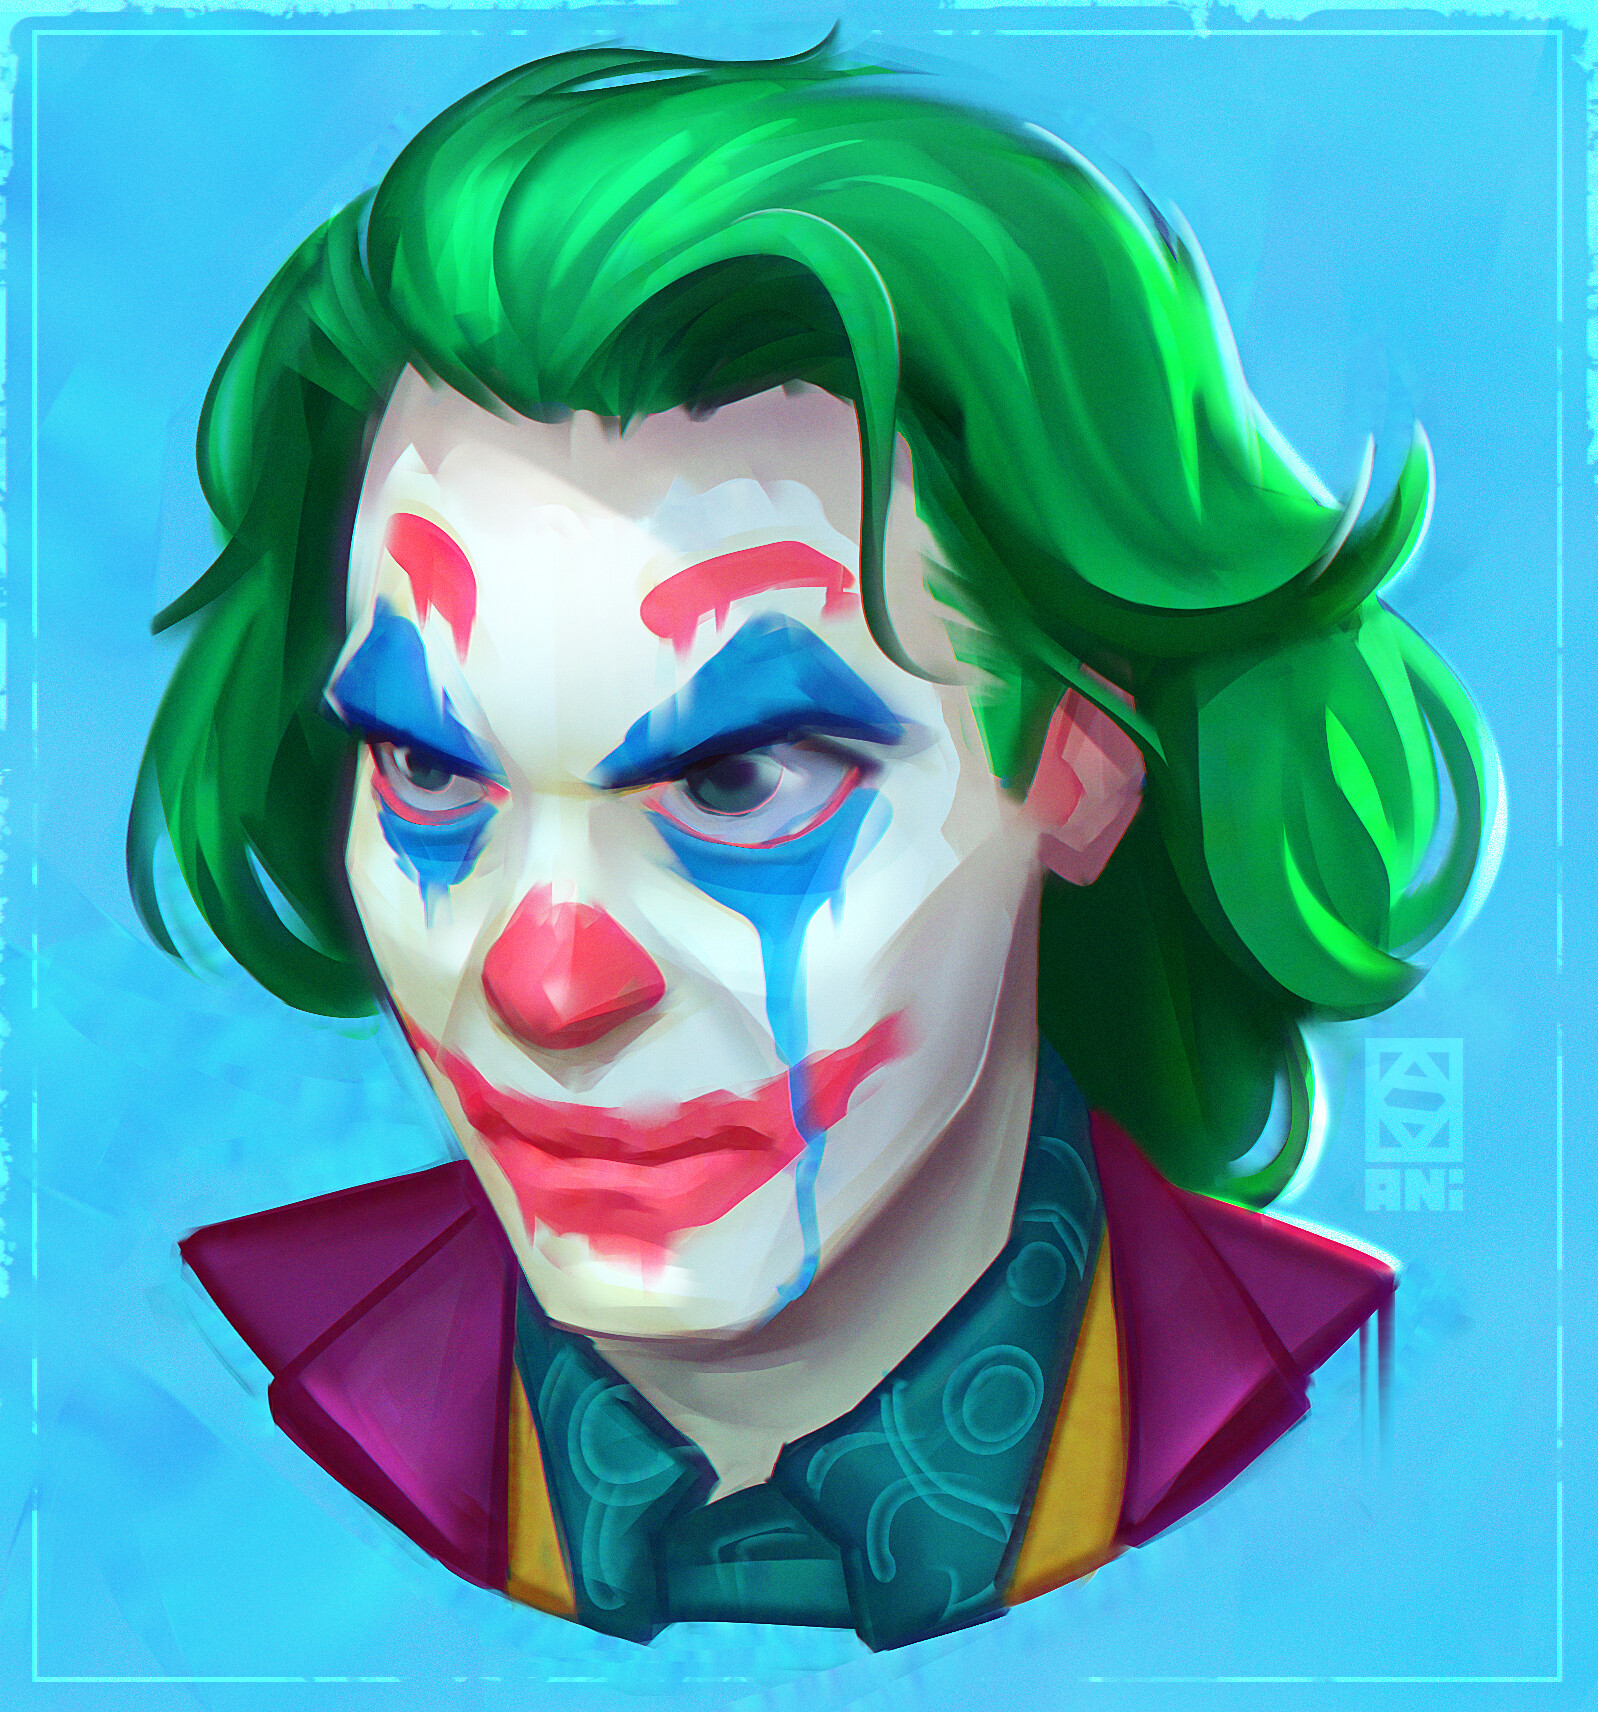 ArtStation - Joker Portrait Stilization